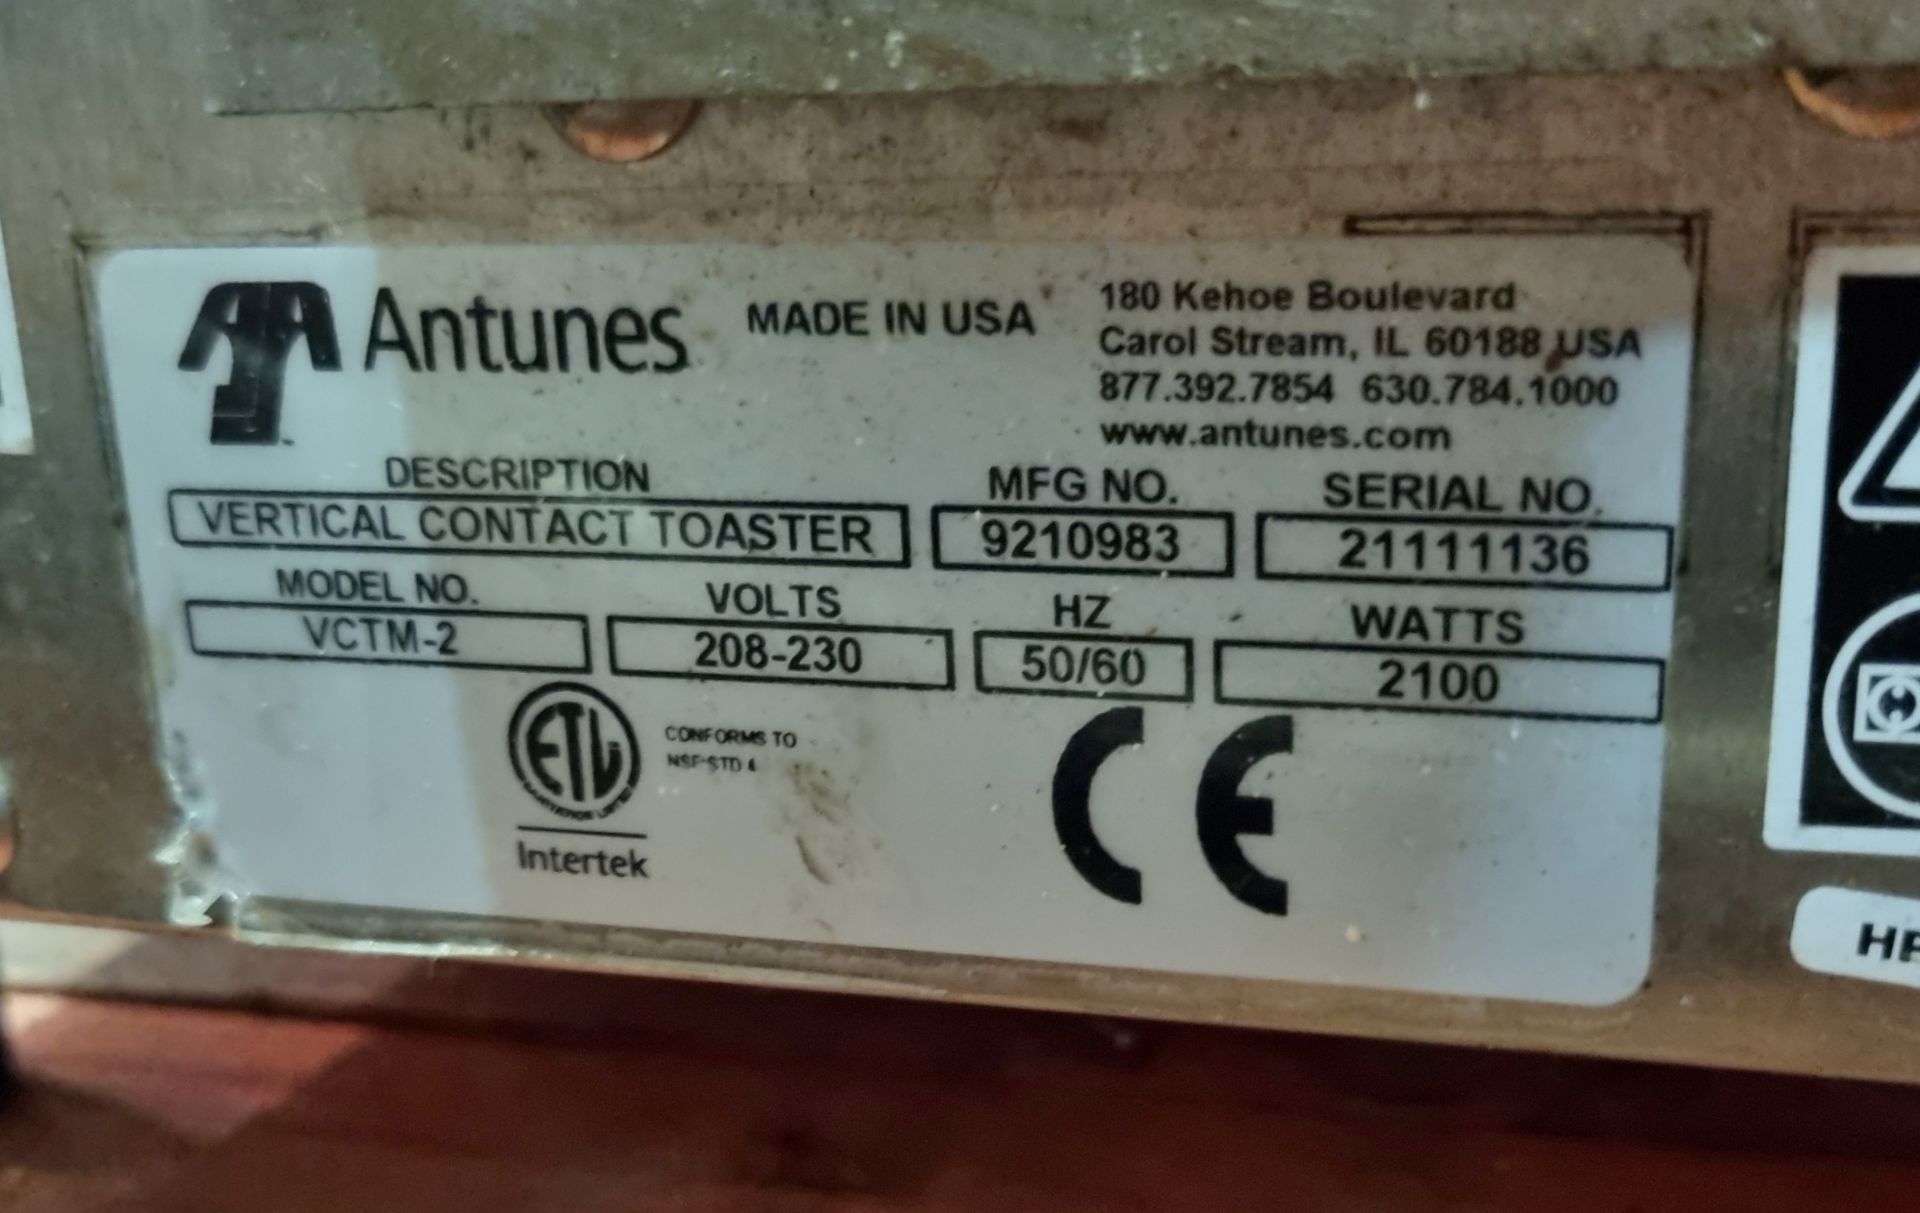 Atunes stainless steel vertical contact toaster - Bild 4 aus 4